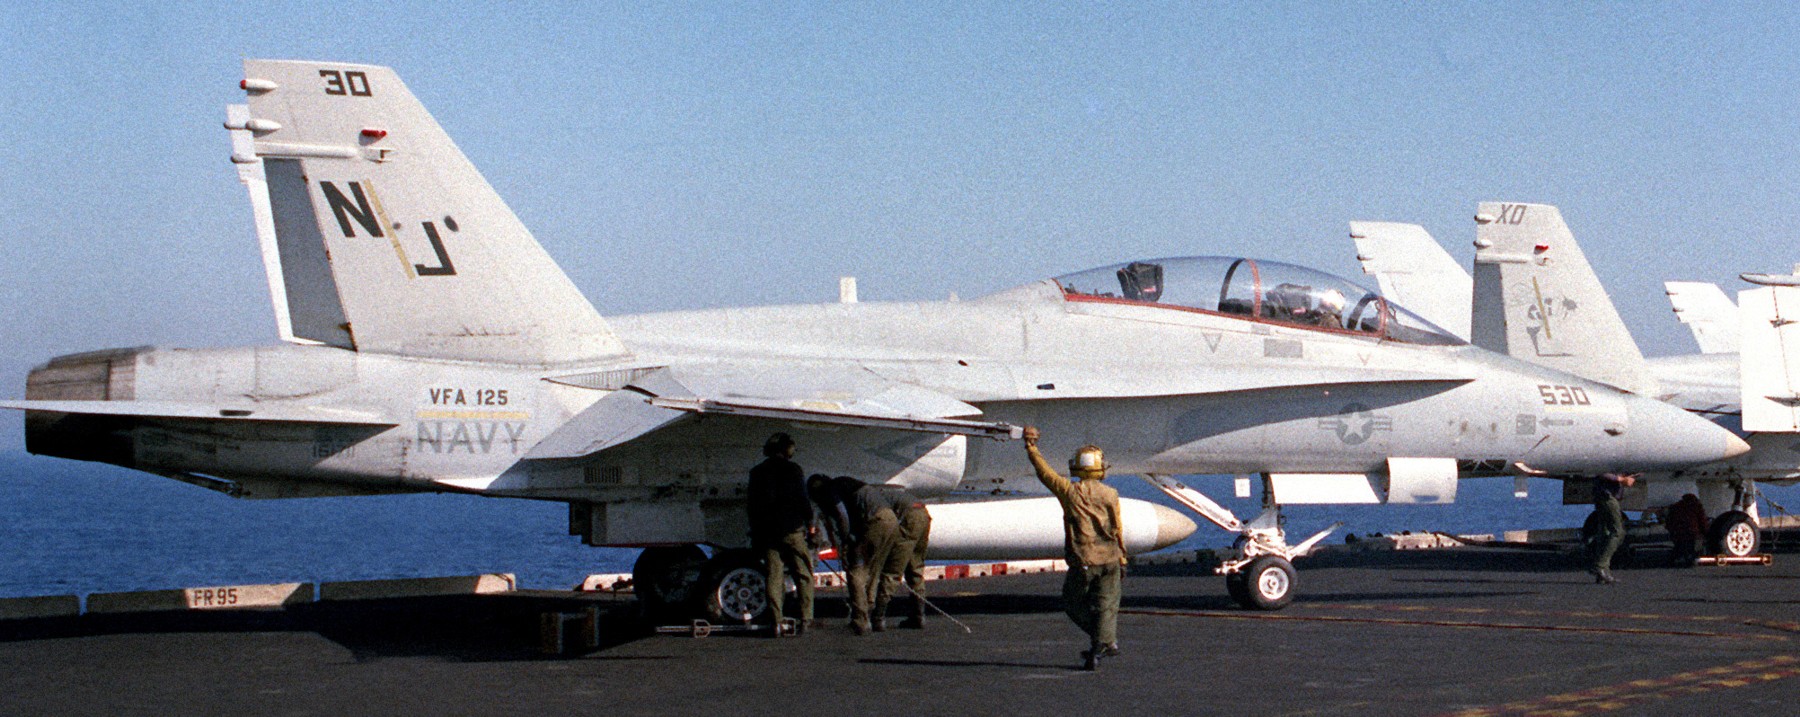 vfa-125 rough raiders strike fighter squadron f/a-18b hornet 1983 26